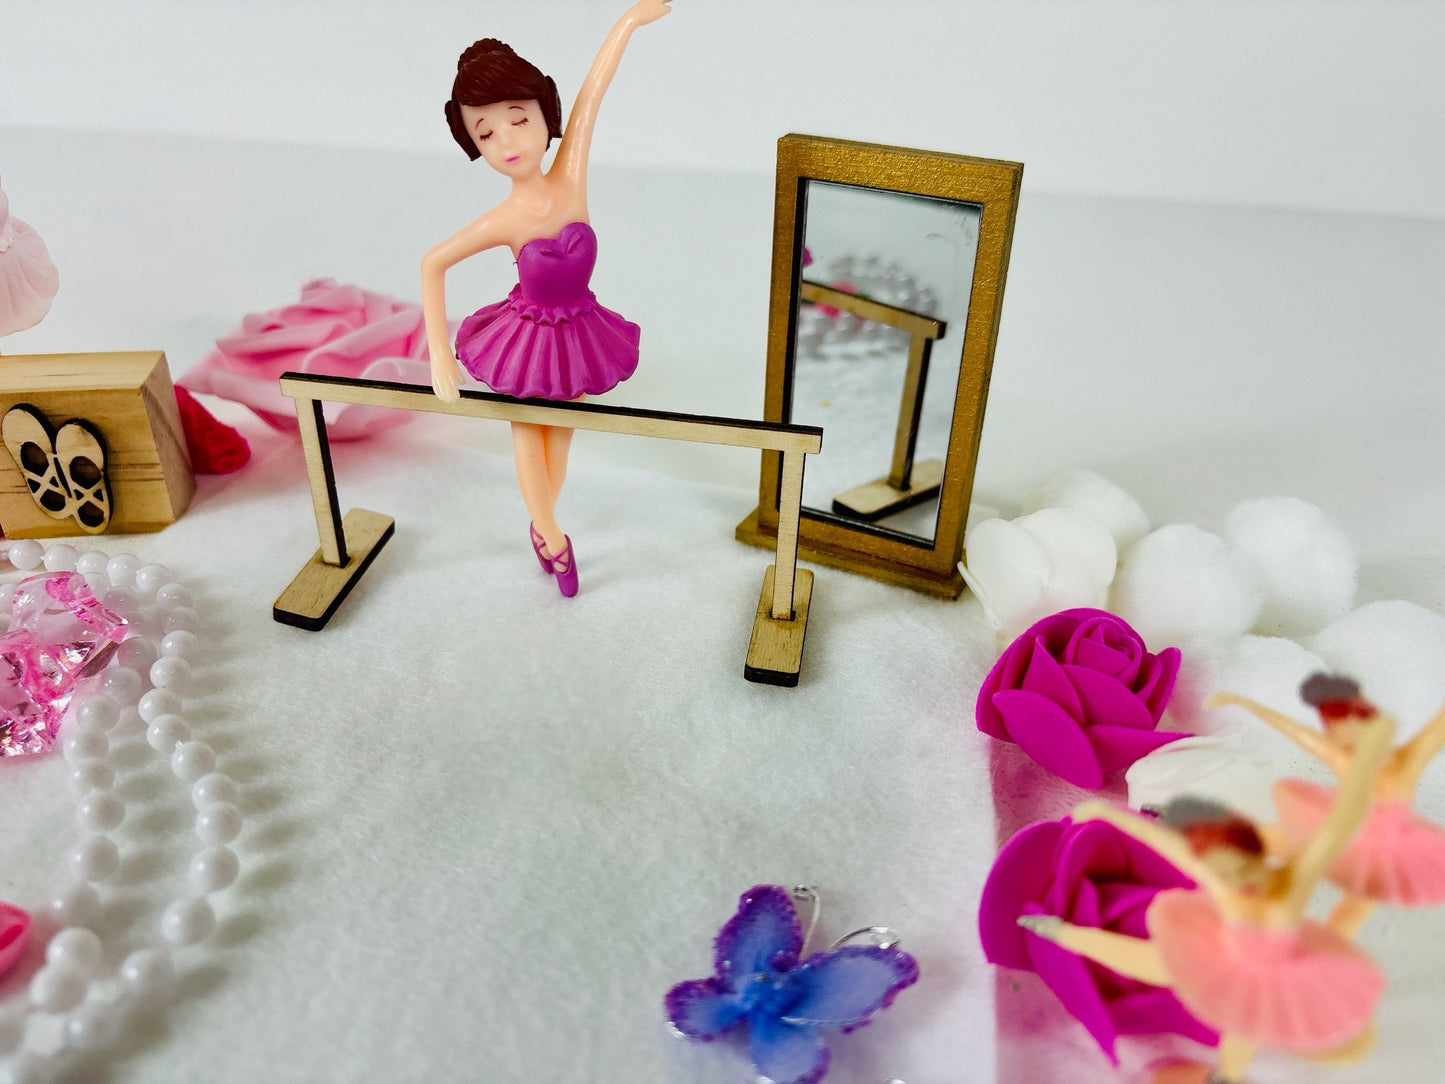 Enchanting Ballerina Princess Sensory Busy Box, Ballet Kinetic Sand Sensory Kit, Dance Inspired Gift for Girls, Imaginative Play Bin